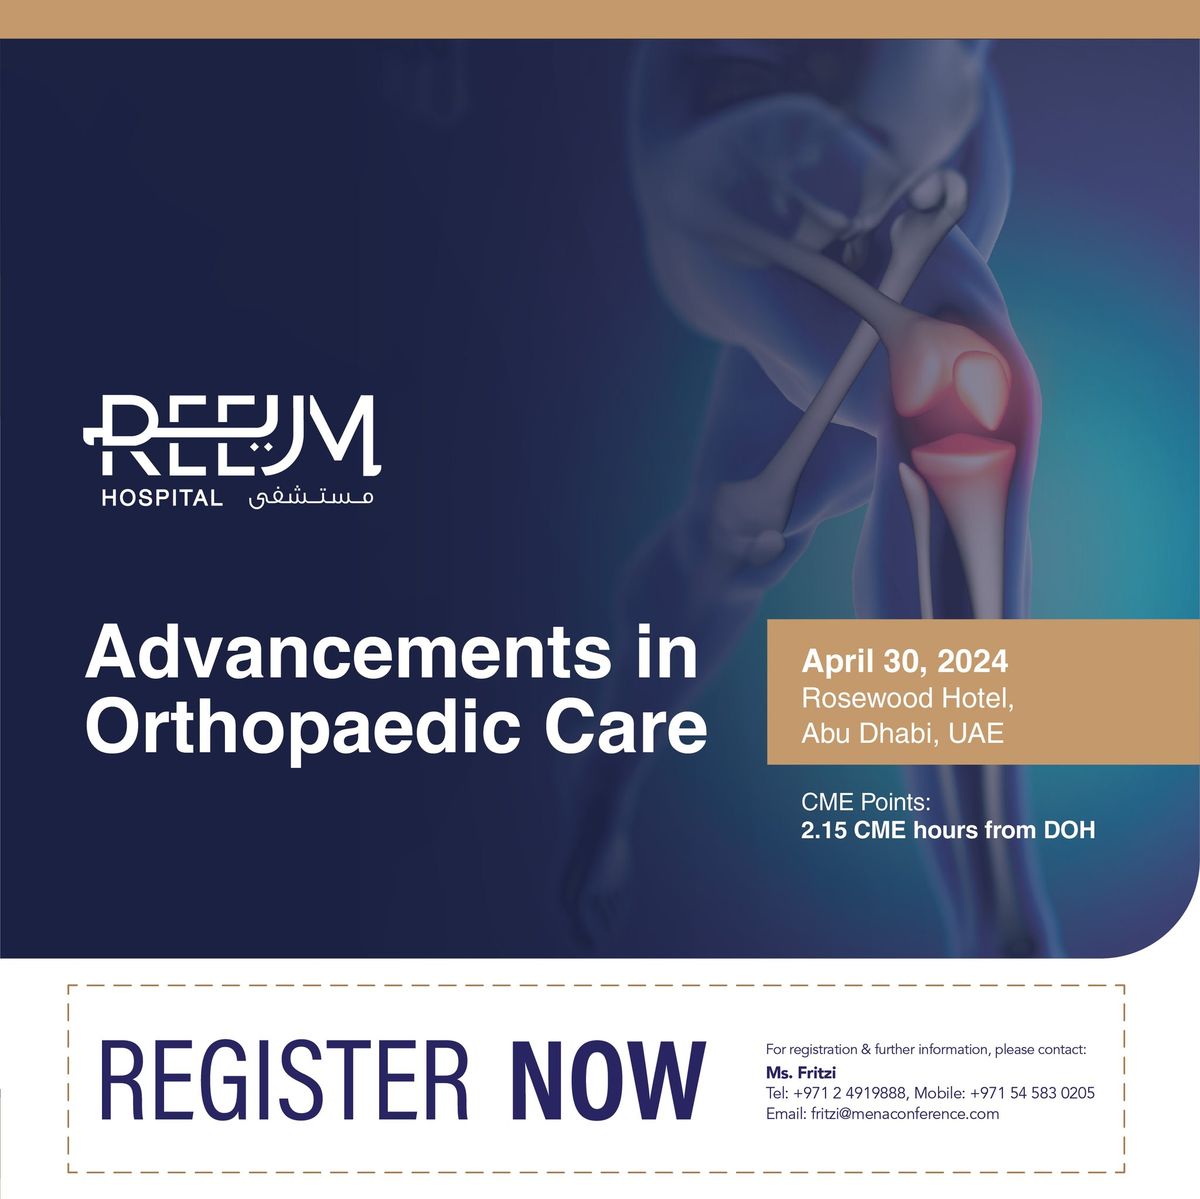 Reem Hospital - Advancements in Orthopaedic Care